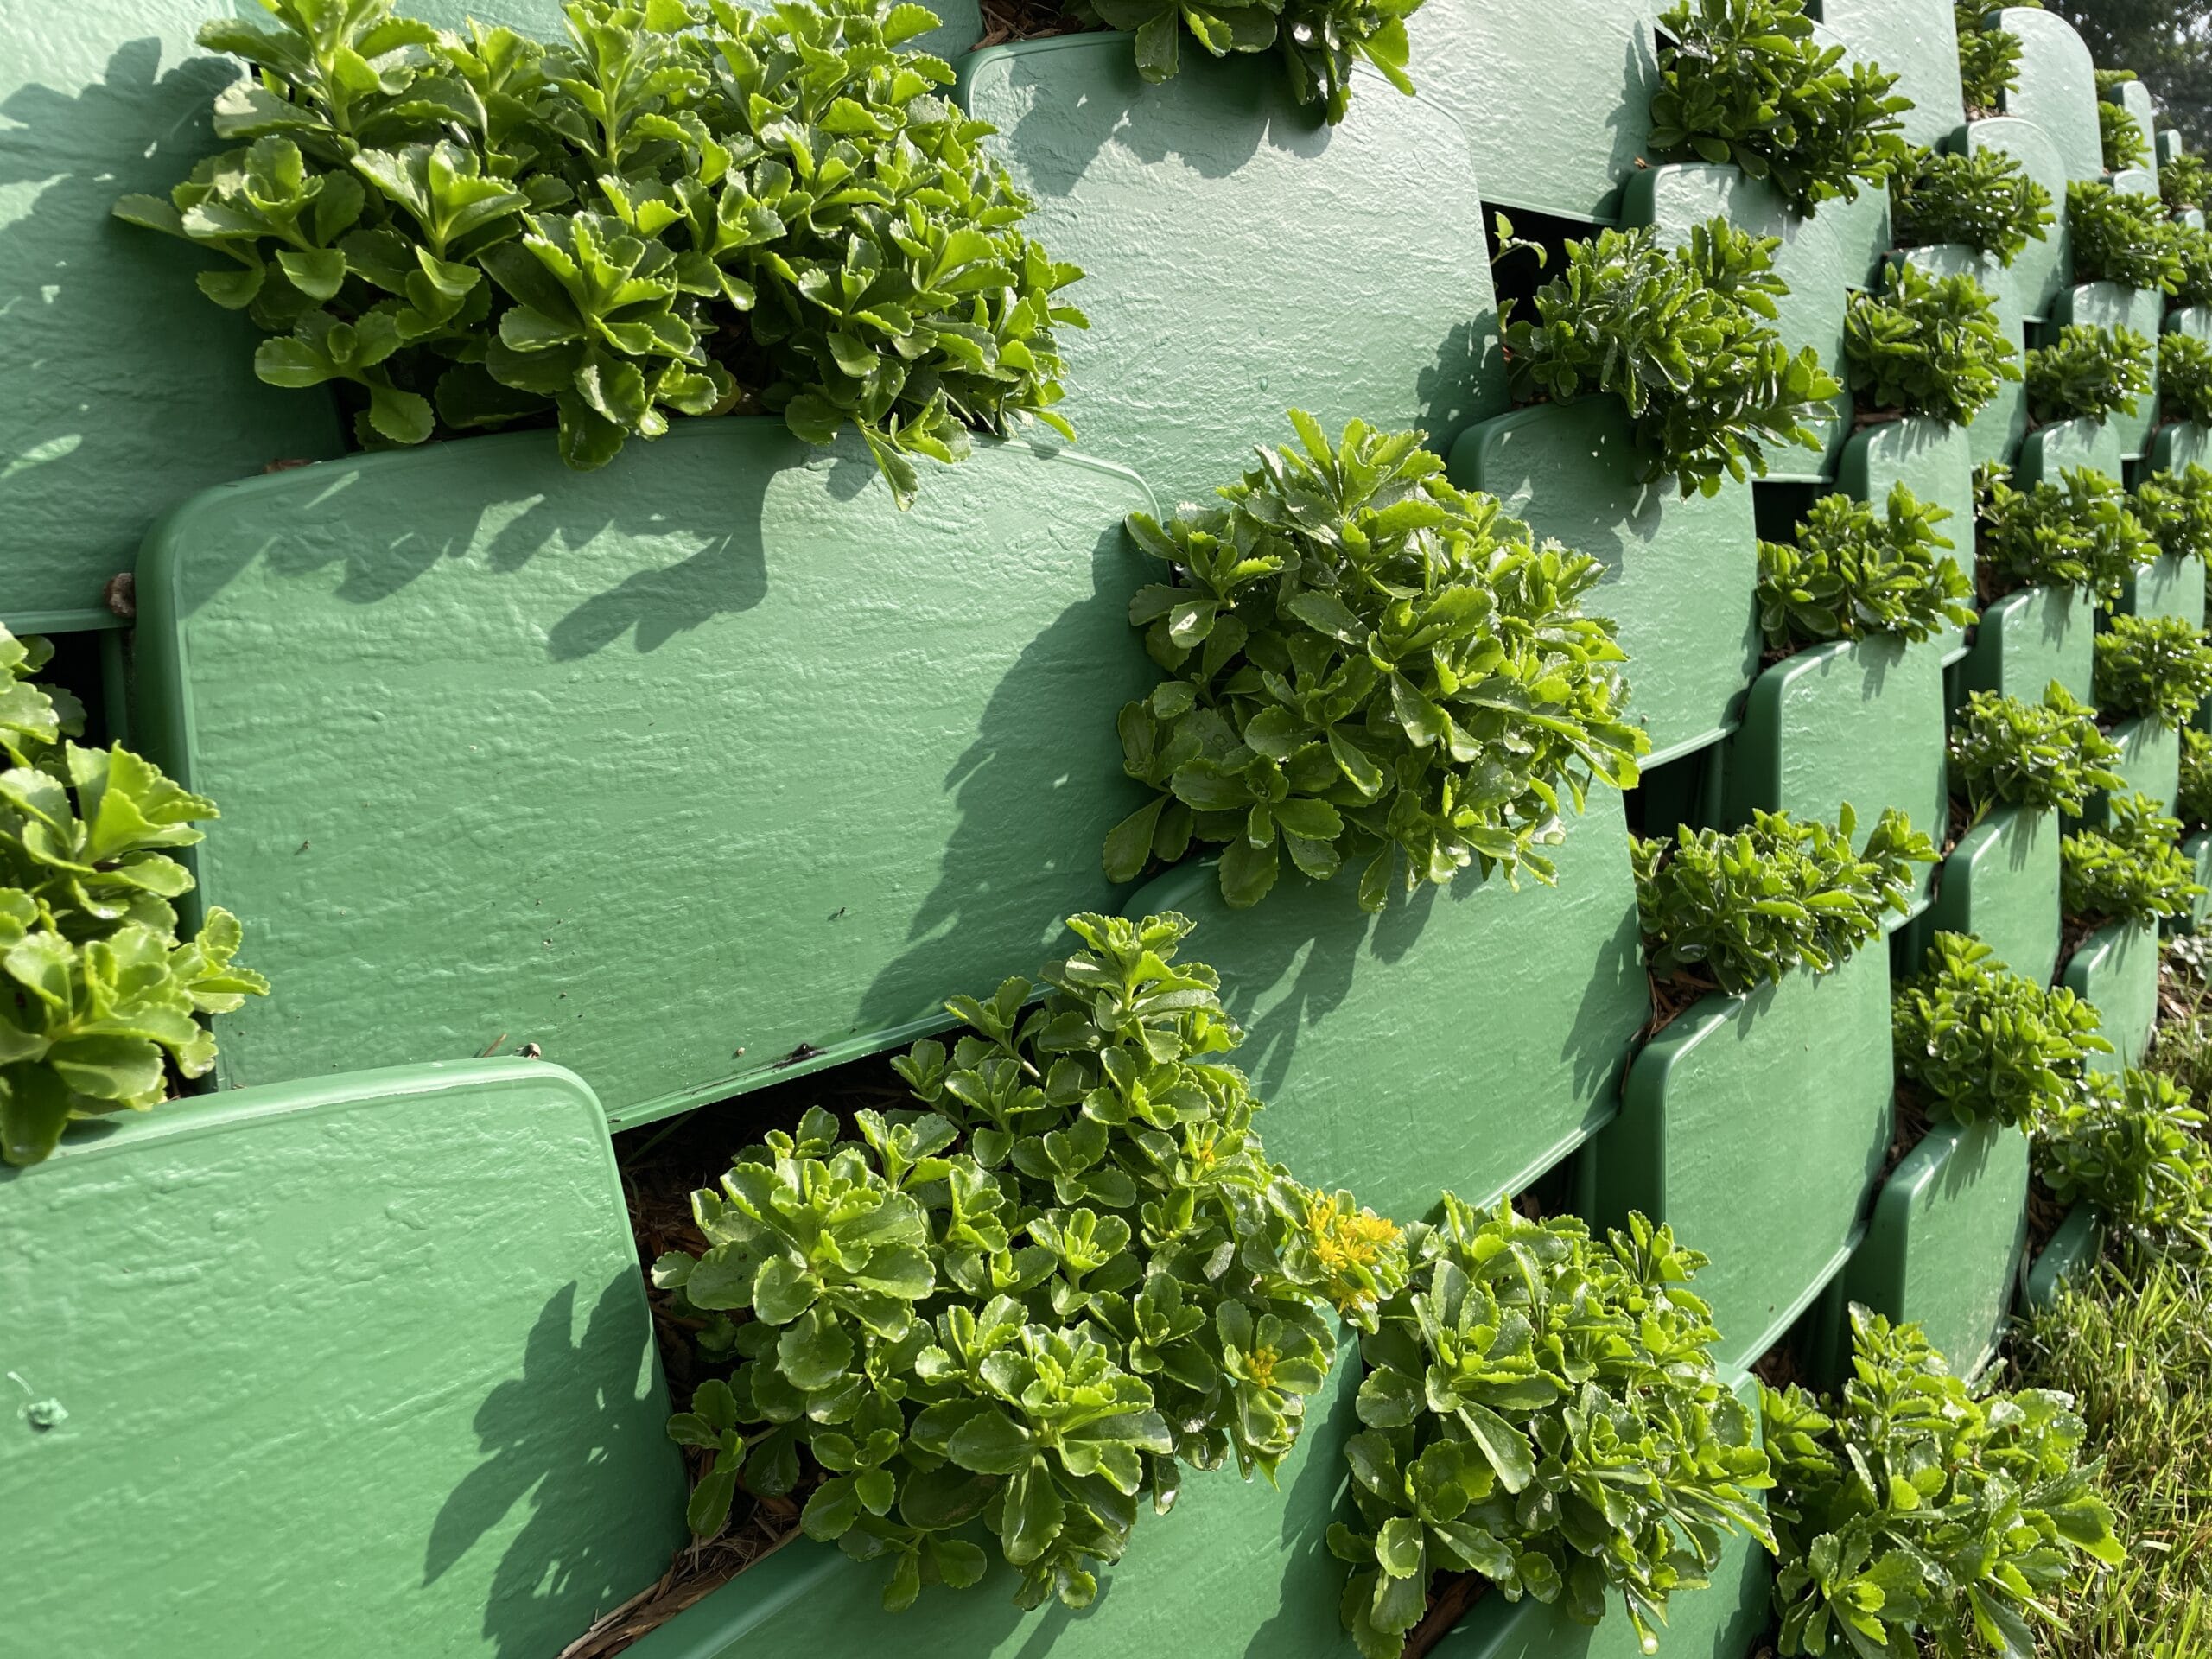 Sedum growing in a living retaining wall